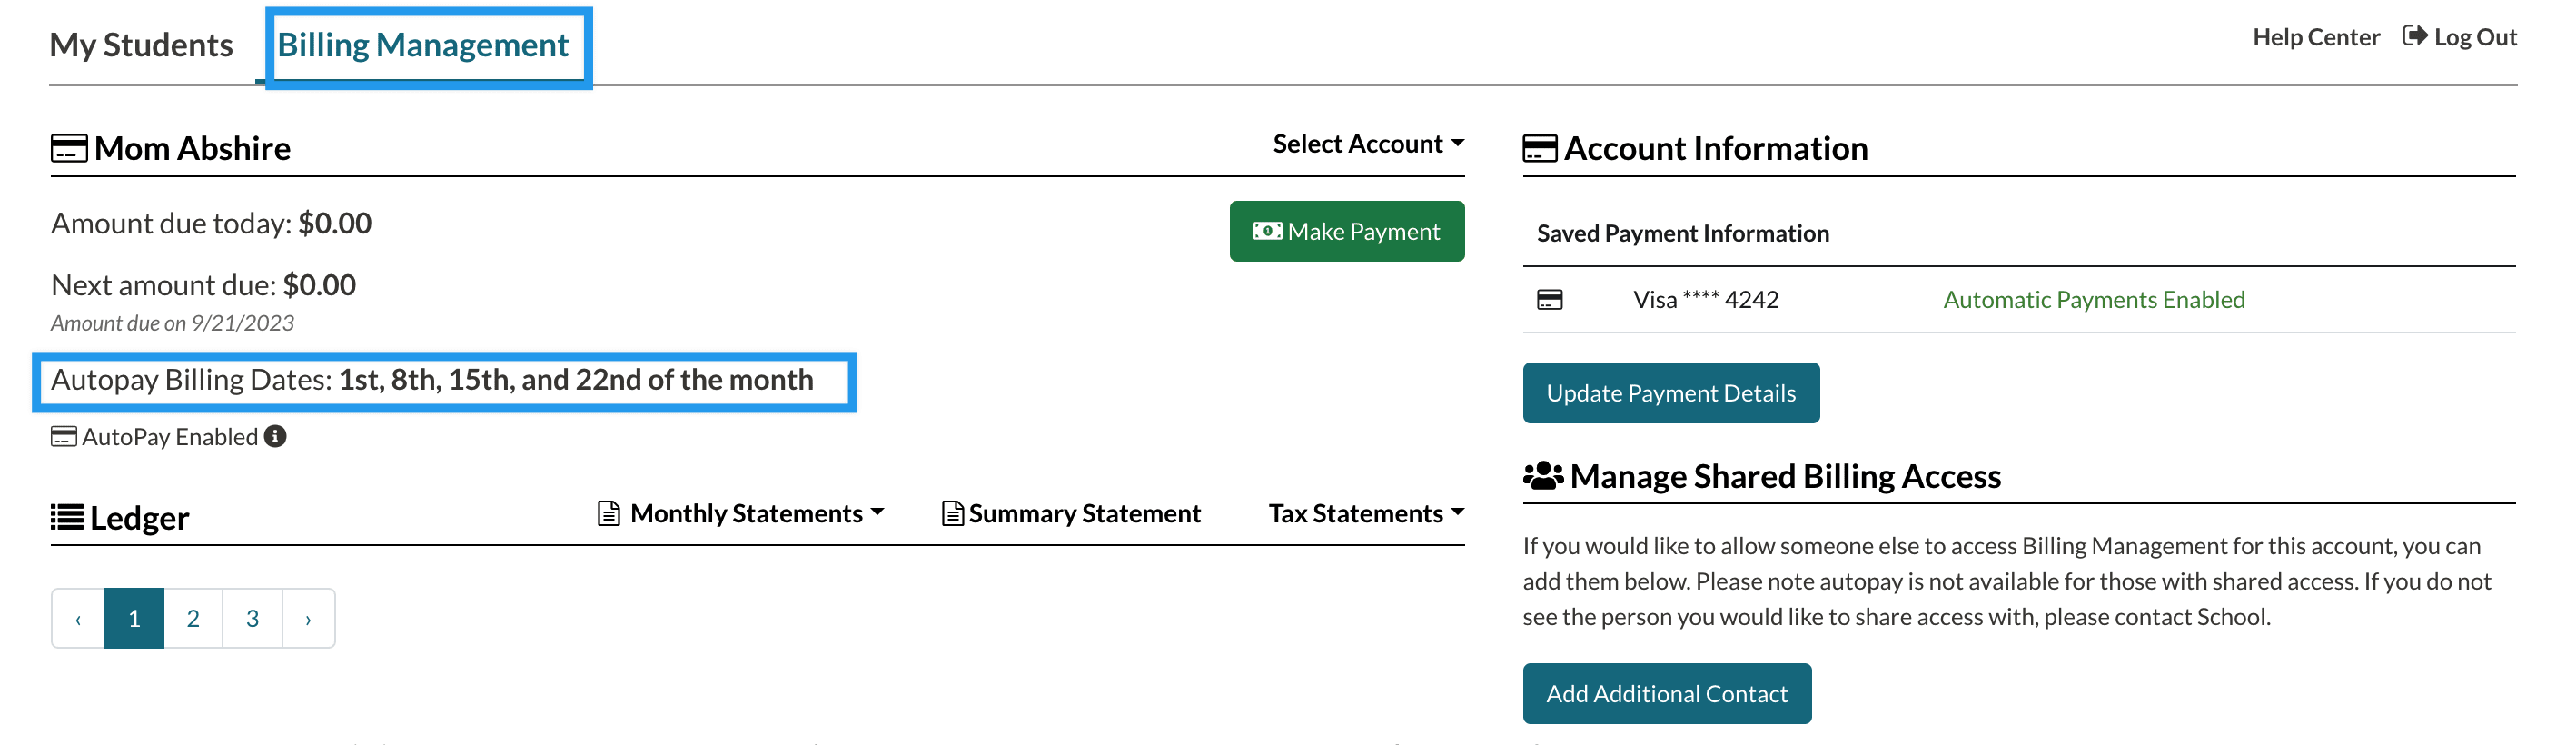 Billing Management tab of the Parent Portal.